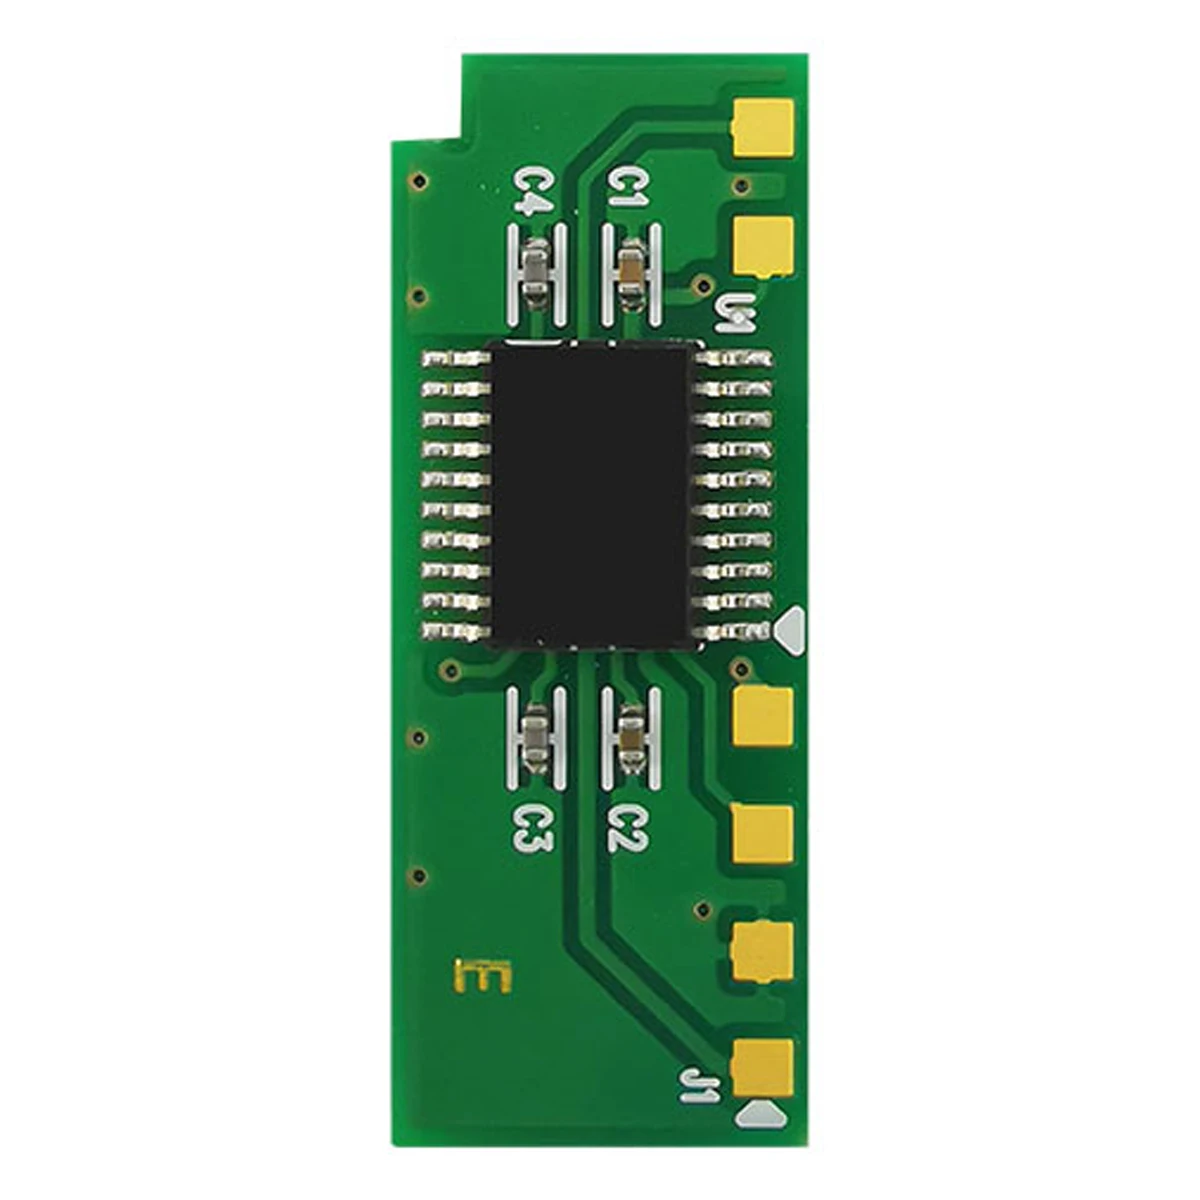 

PC-211EV PC-211E PC-211 PC 210 PC-230R PA-210 PB-210 toner cartridge chip For Pantum M6500 M6550 M6600 P2500 P2200 P2207 P2500W